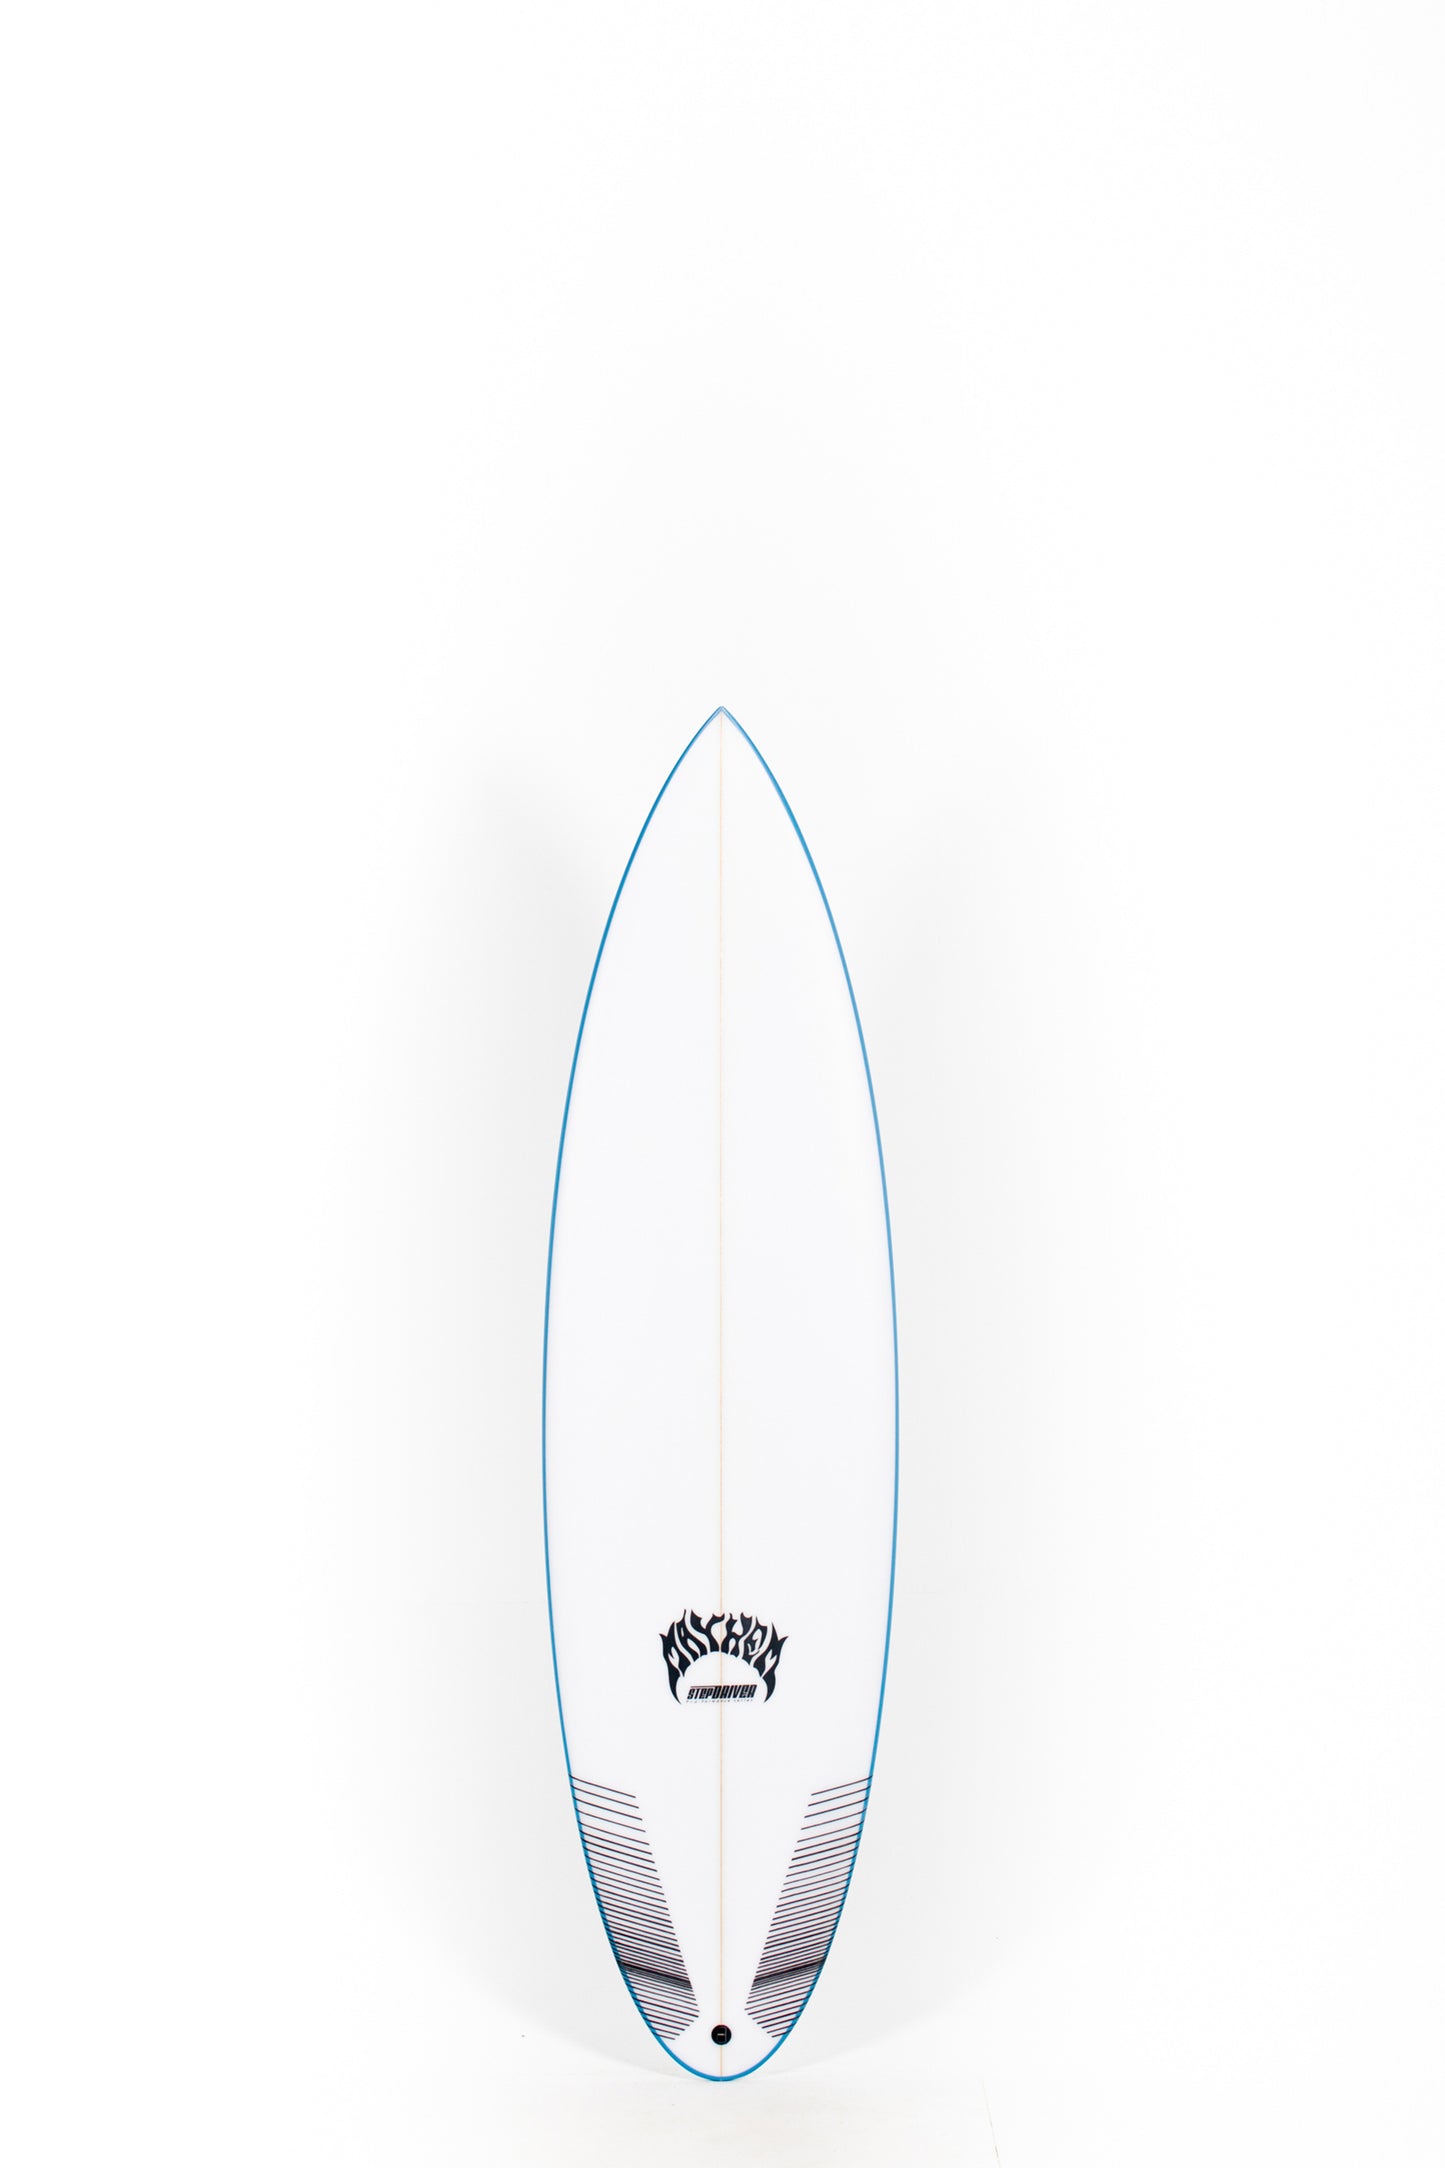 Pukas surf shop - Lost Surfboards - STEP DRIVER by Matt Biolos - 6'0 ” x 19 x 2,44 - 29,25L - MH16078